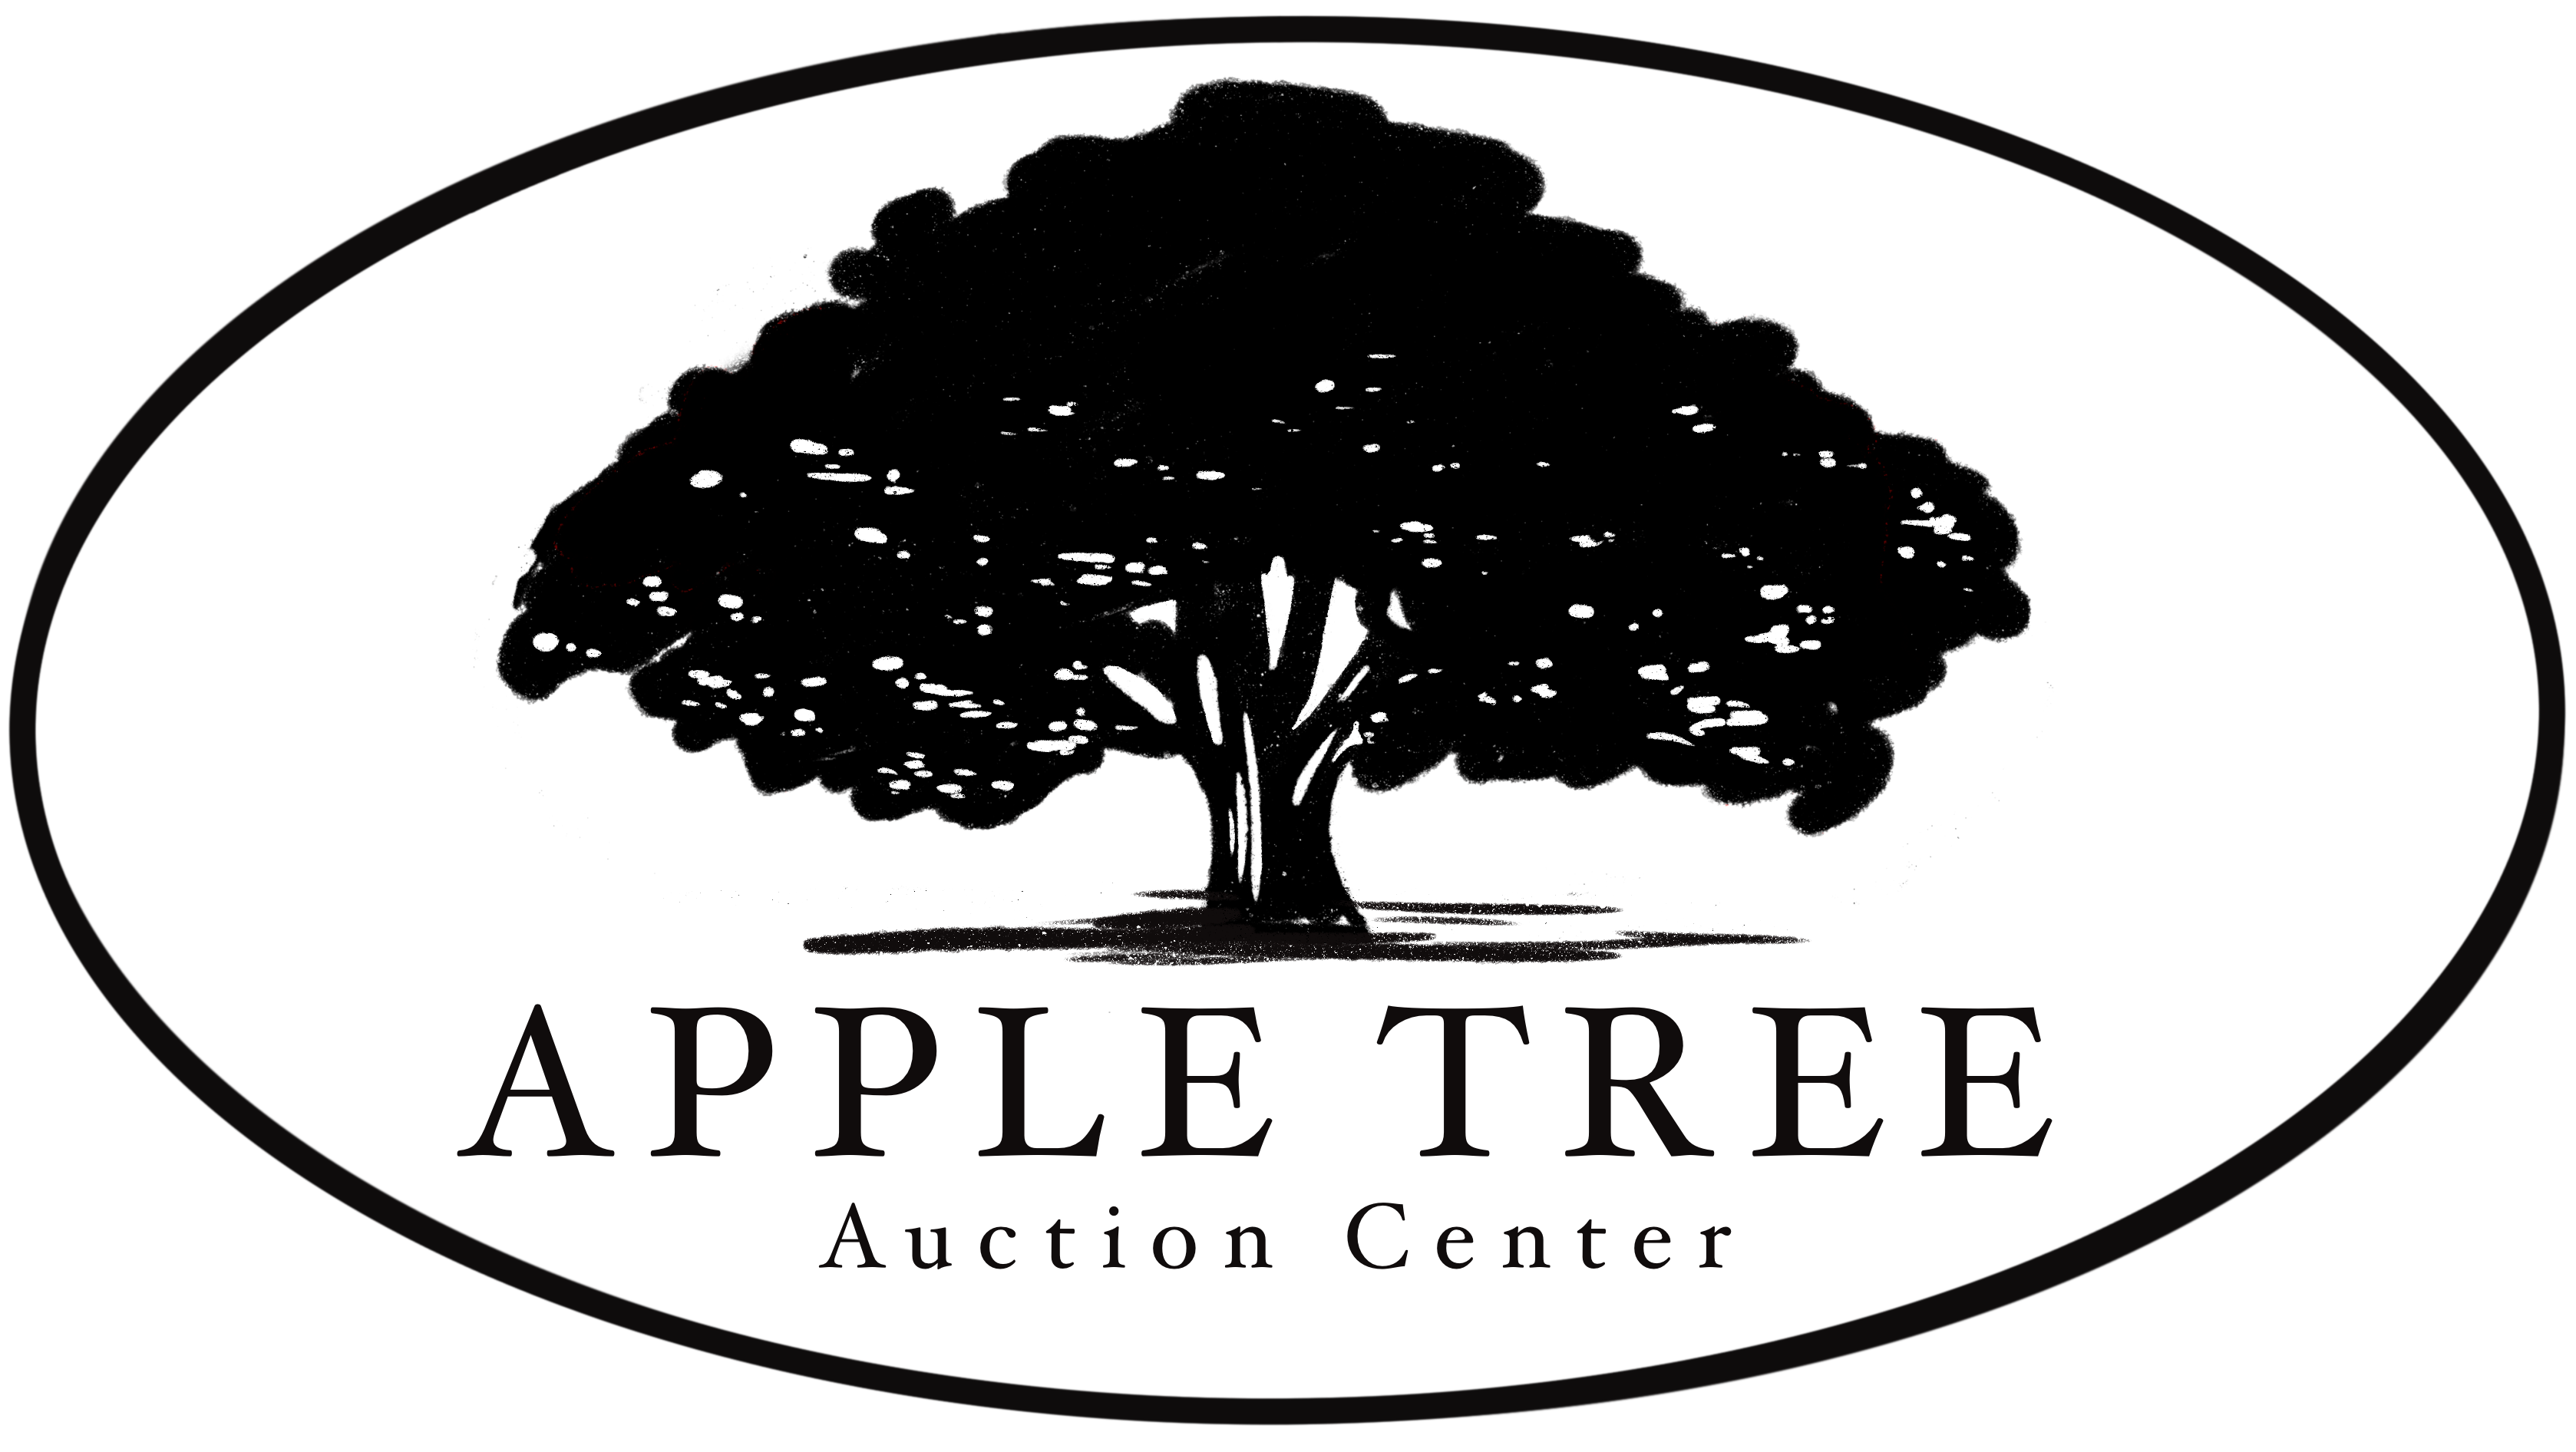 Apple Tree Auction Center